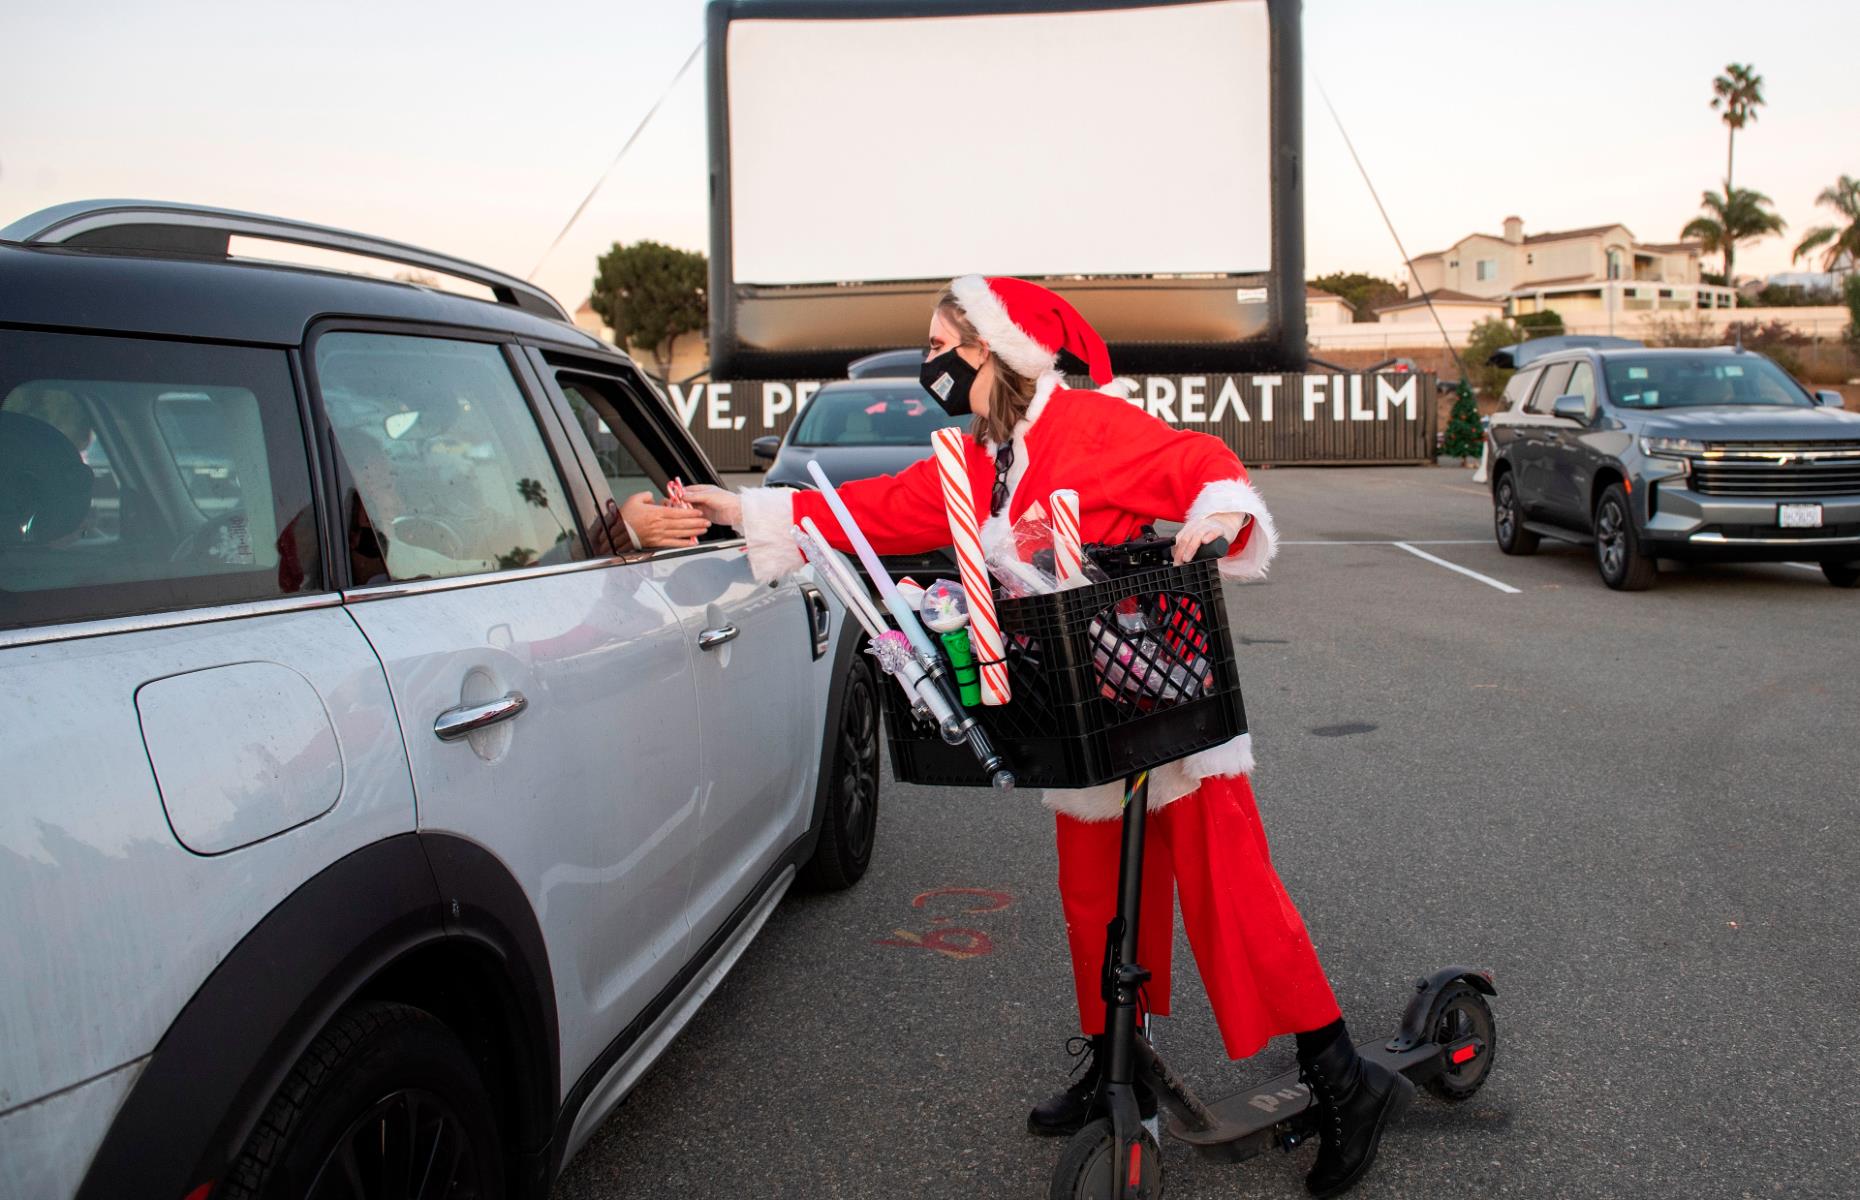 Santa Monica, California: A drive-in movie with a festive twist